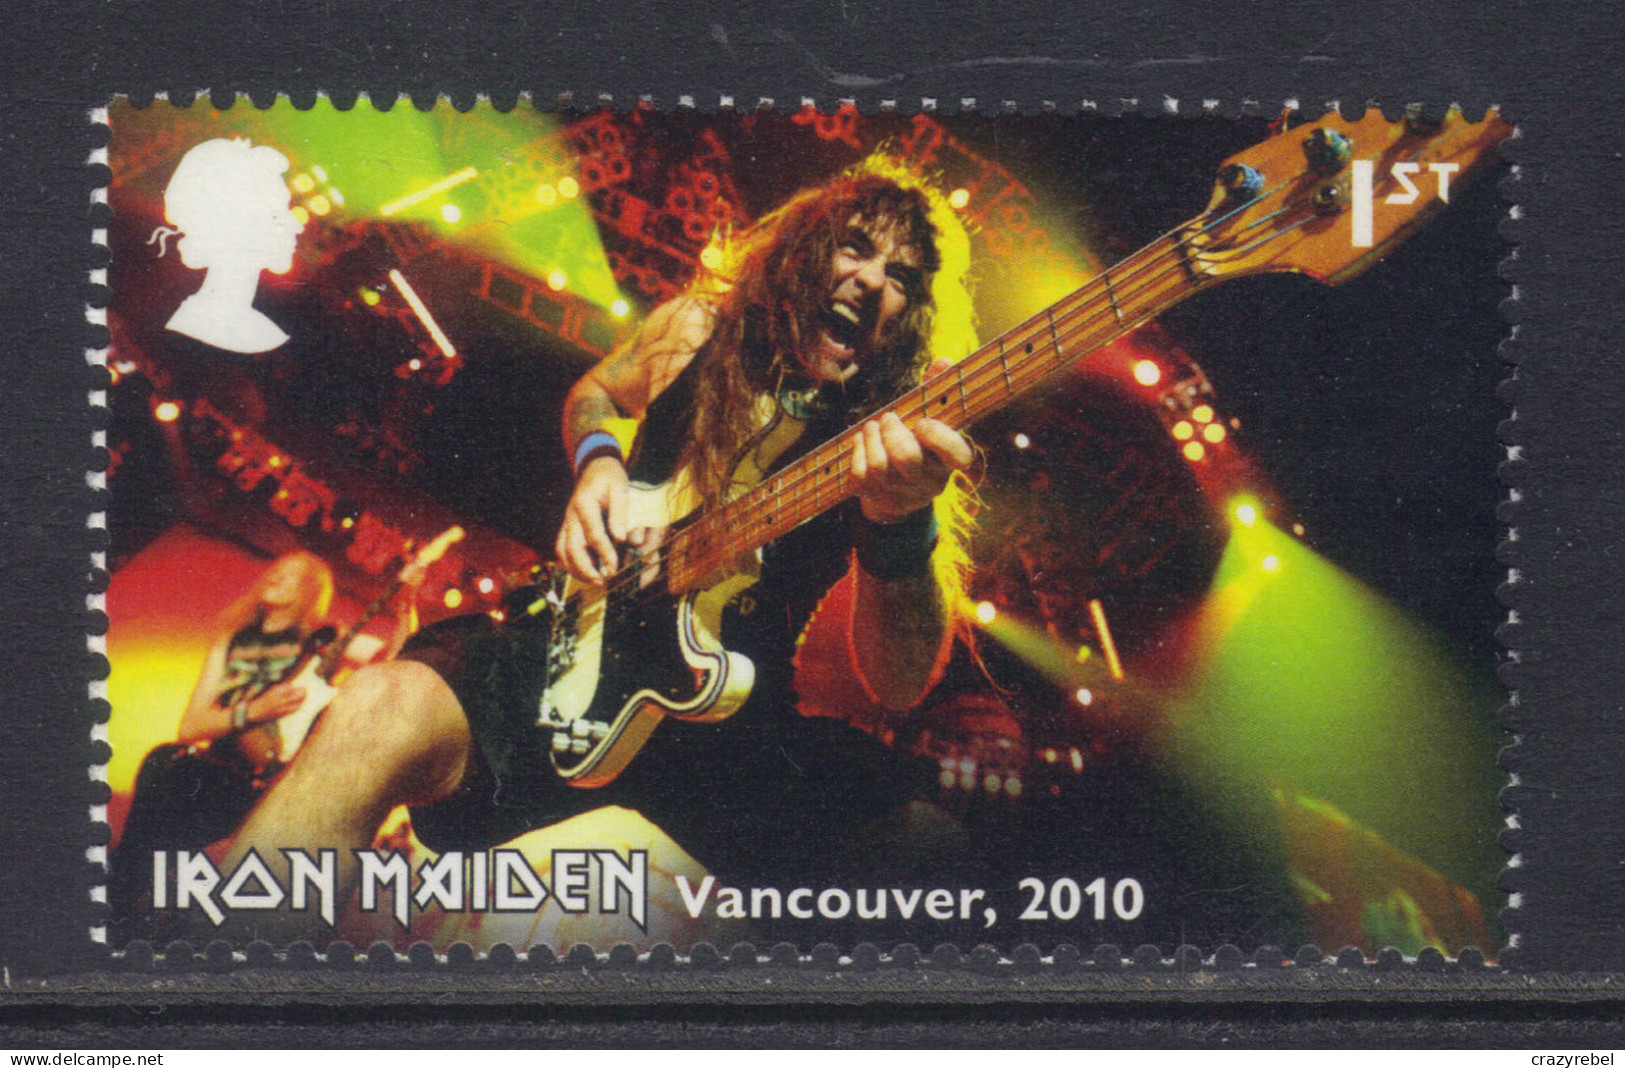 GB 2023 QE2 1st Iron Maiden Tour Vancouver 2010 Umm ( H787 ) - Nuovi